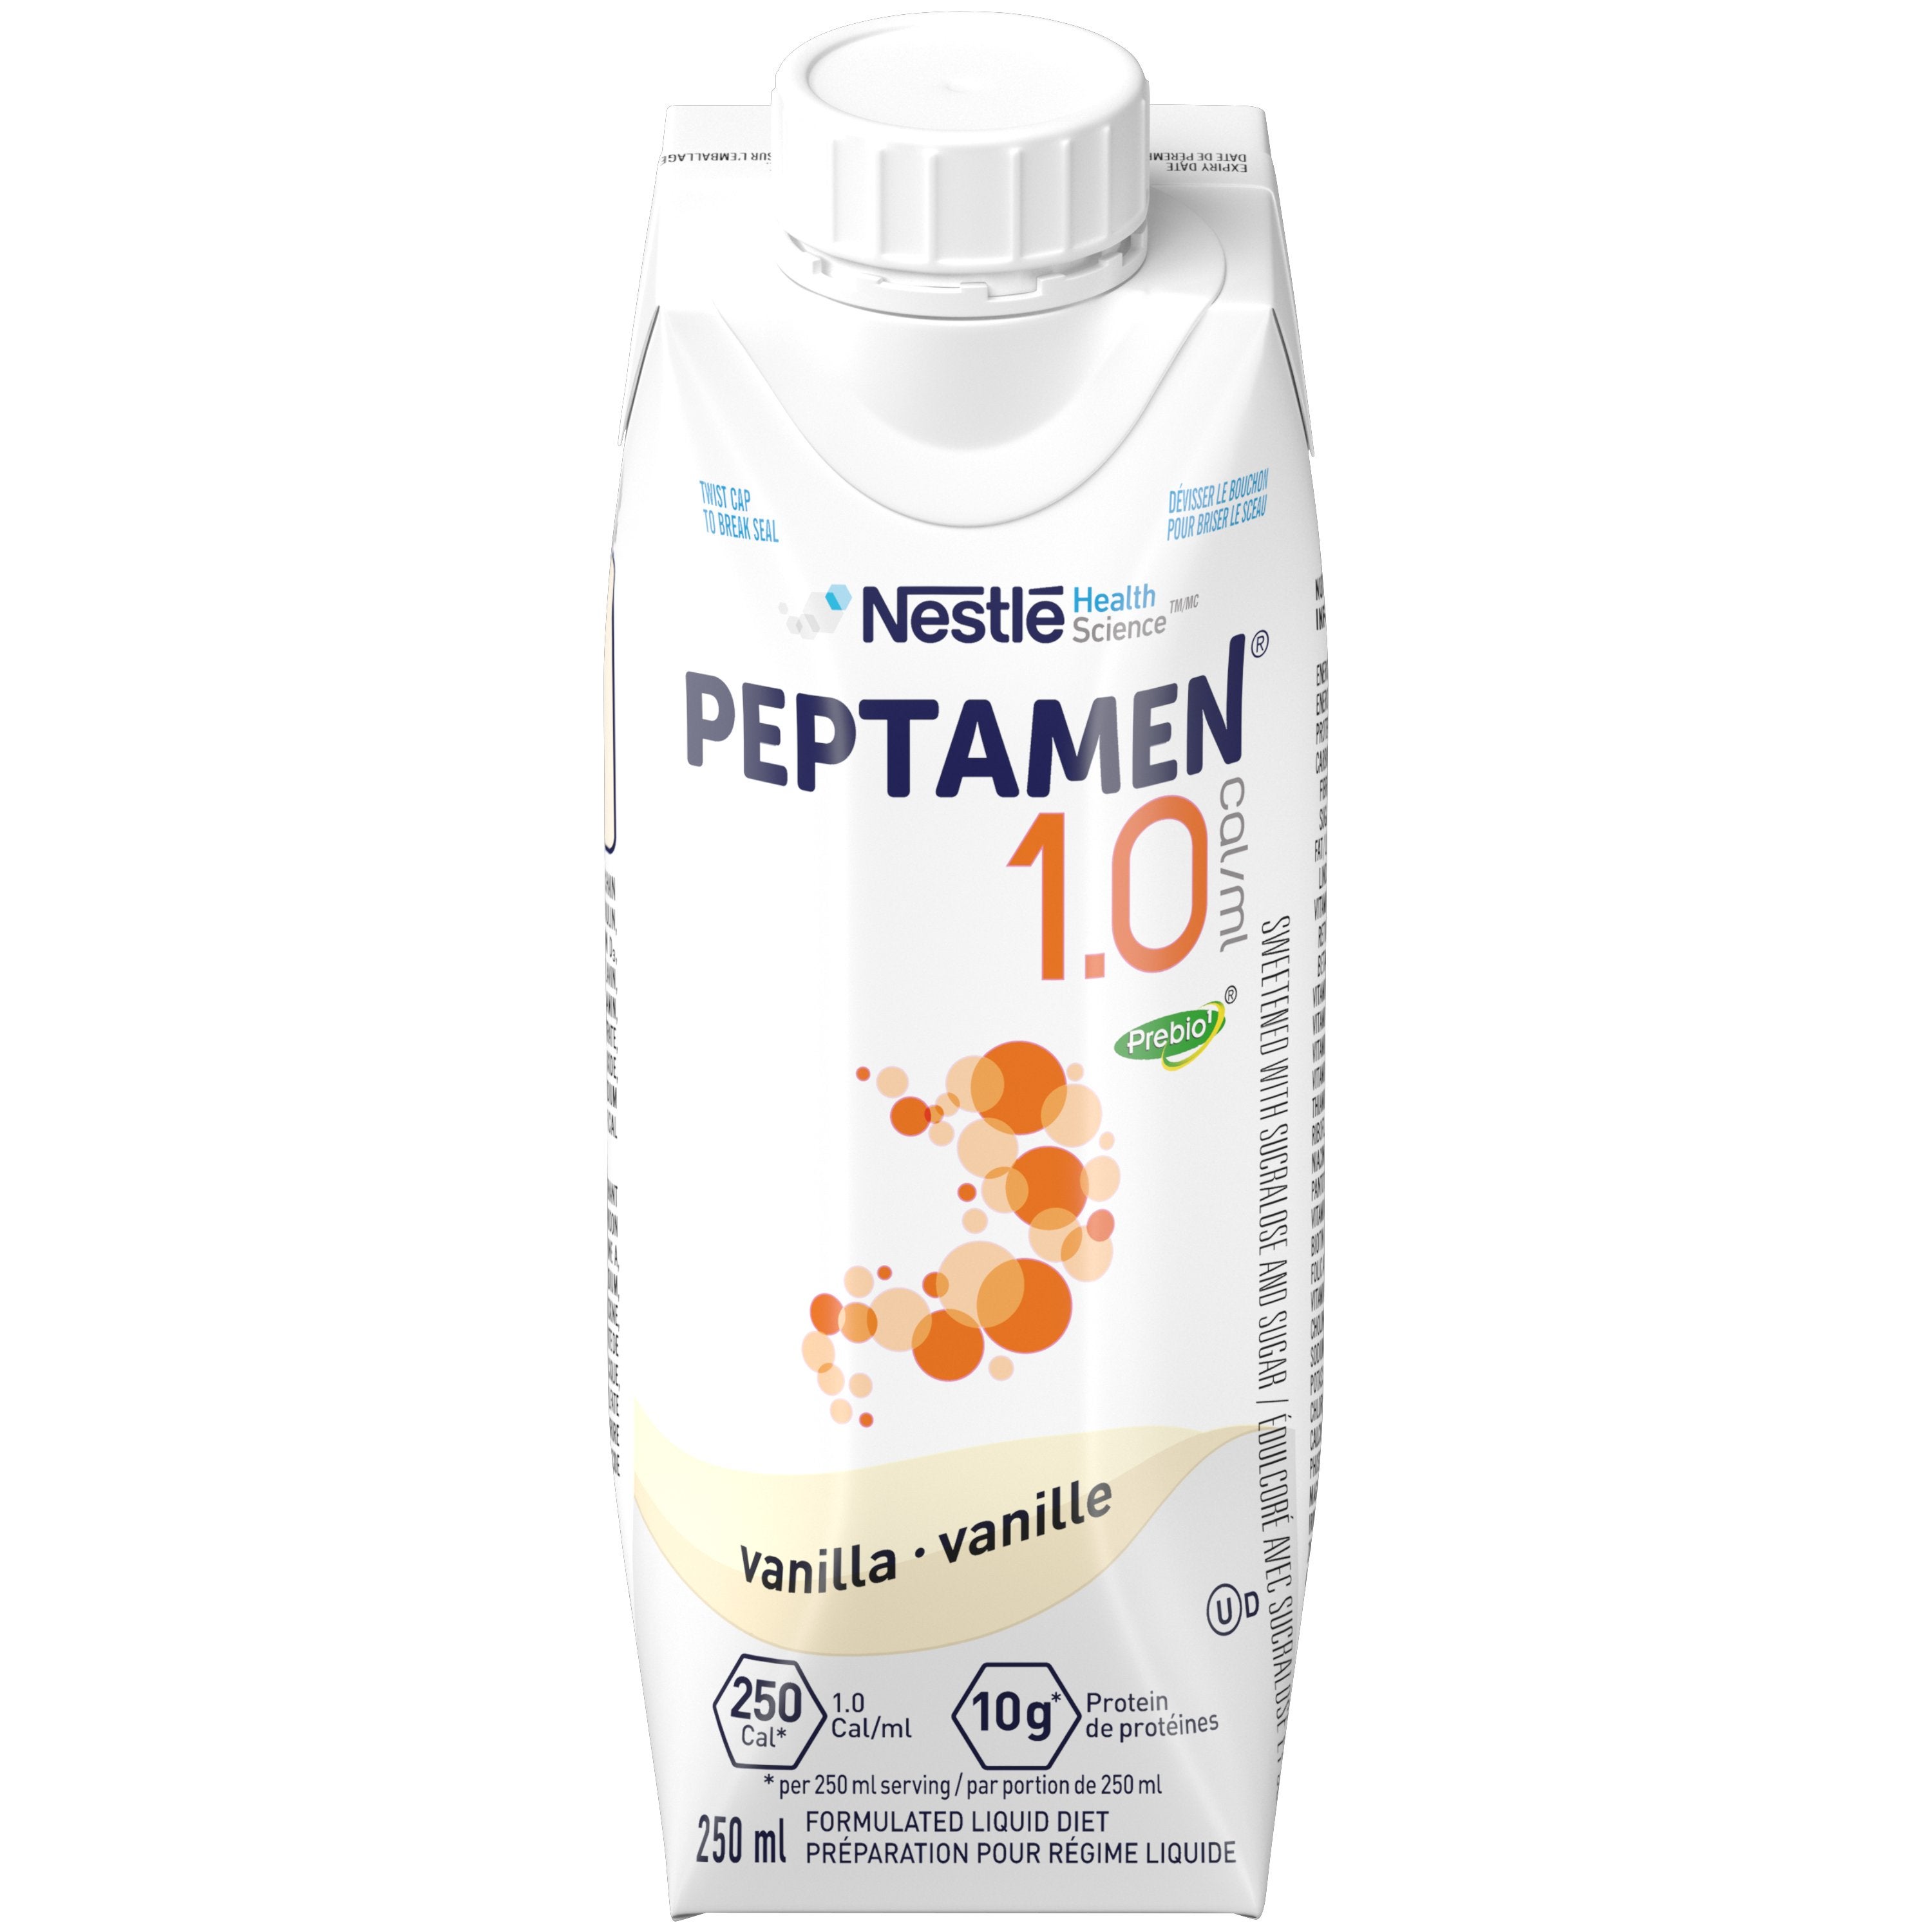 Nestlé Health Science tetra2 Peptamen_1